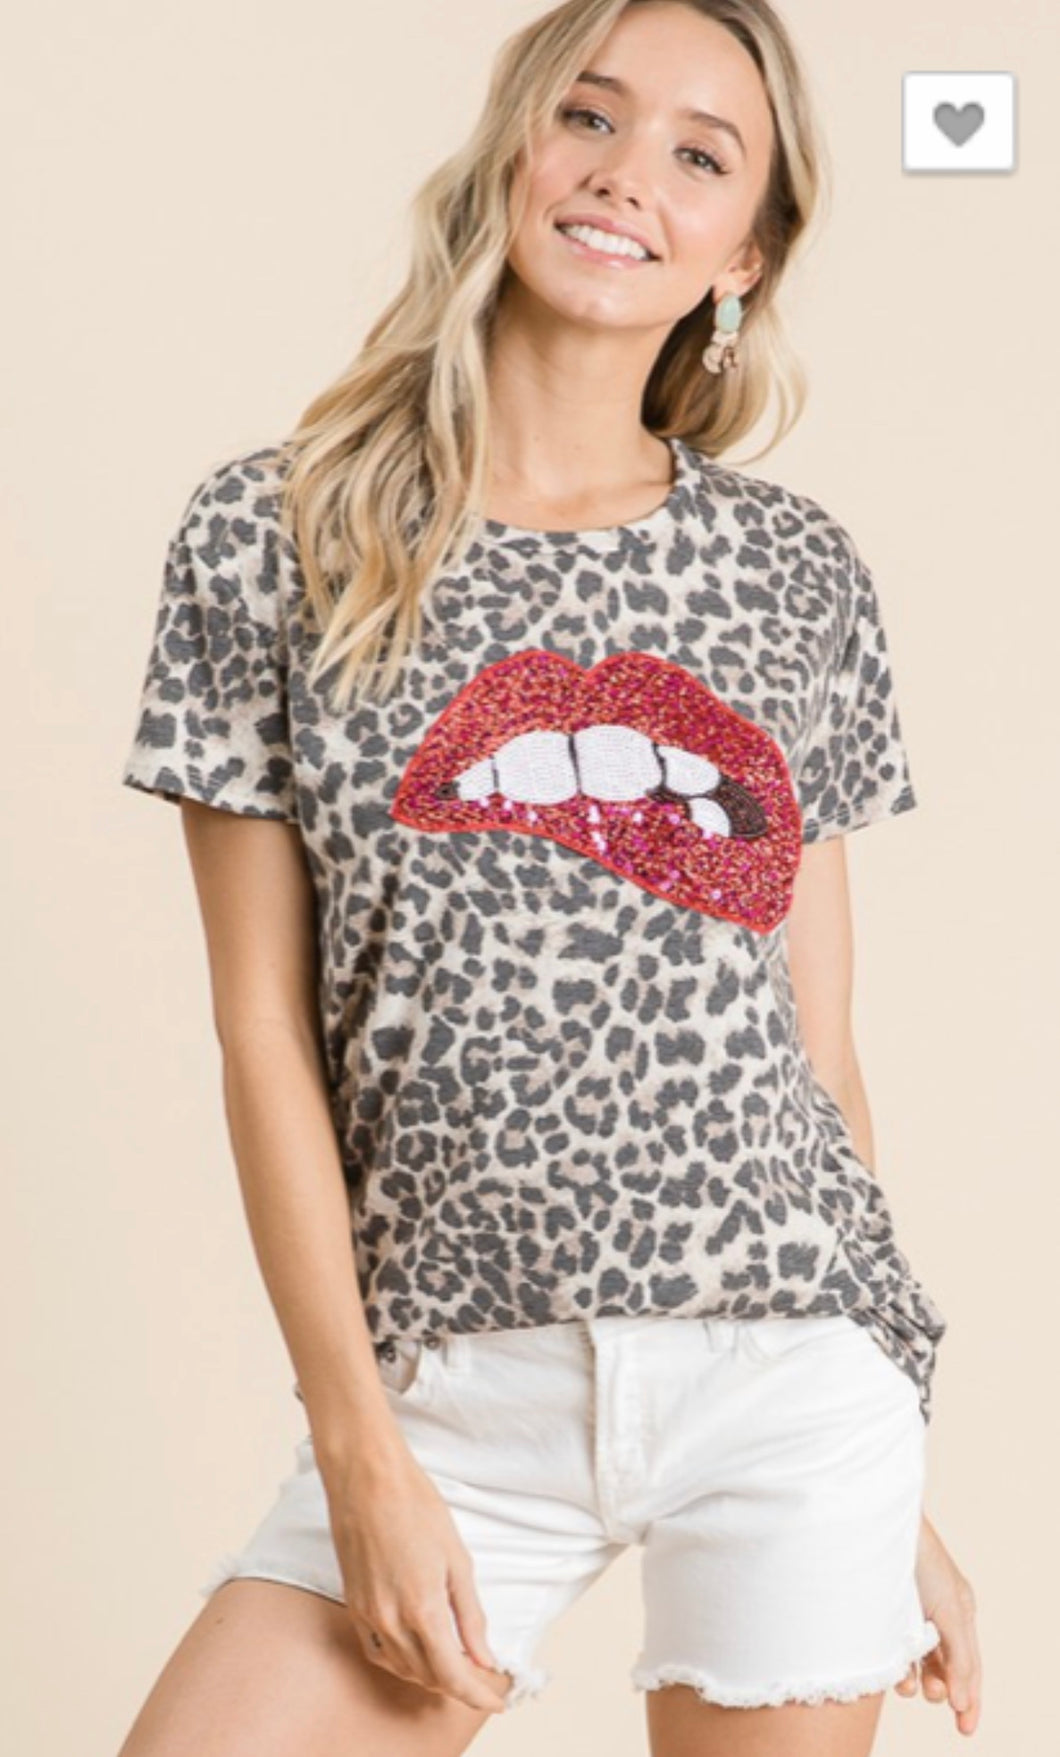 Let it Roar Leopard Top with Sequin Lips